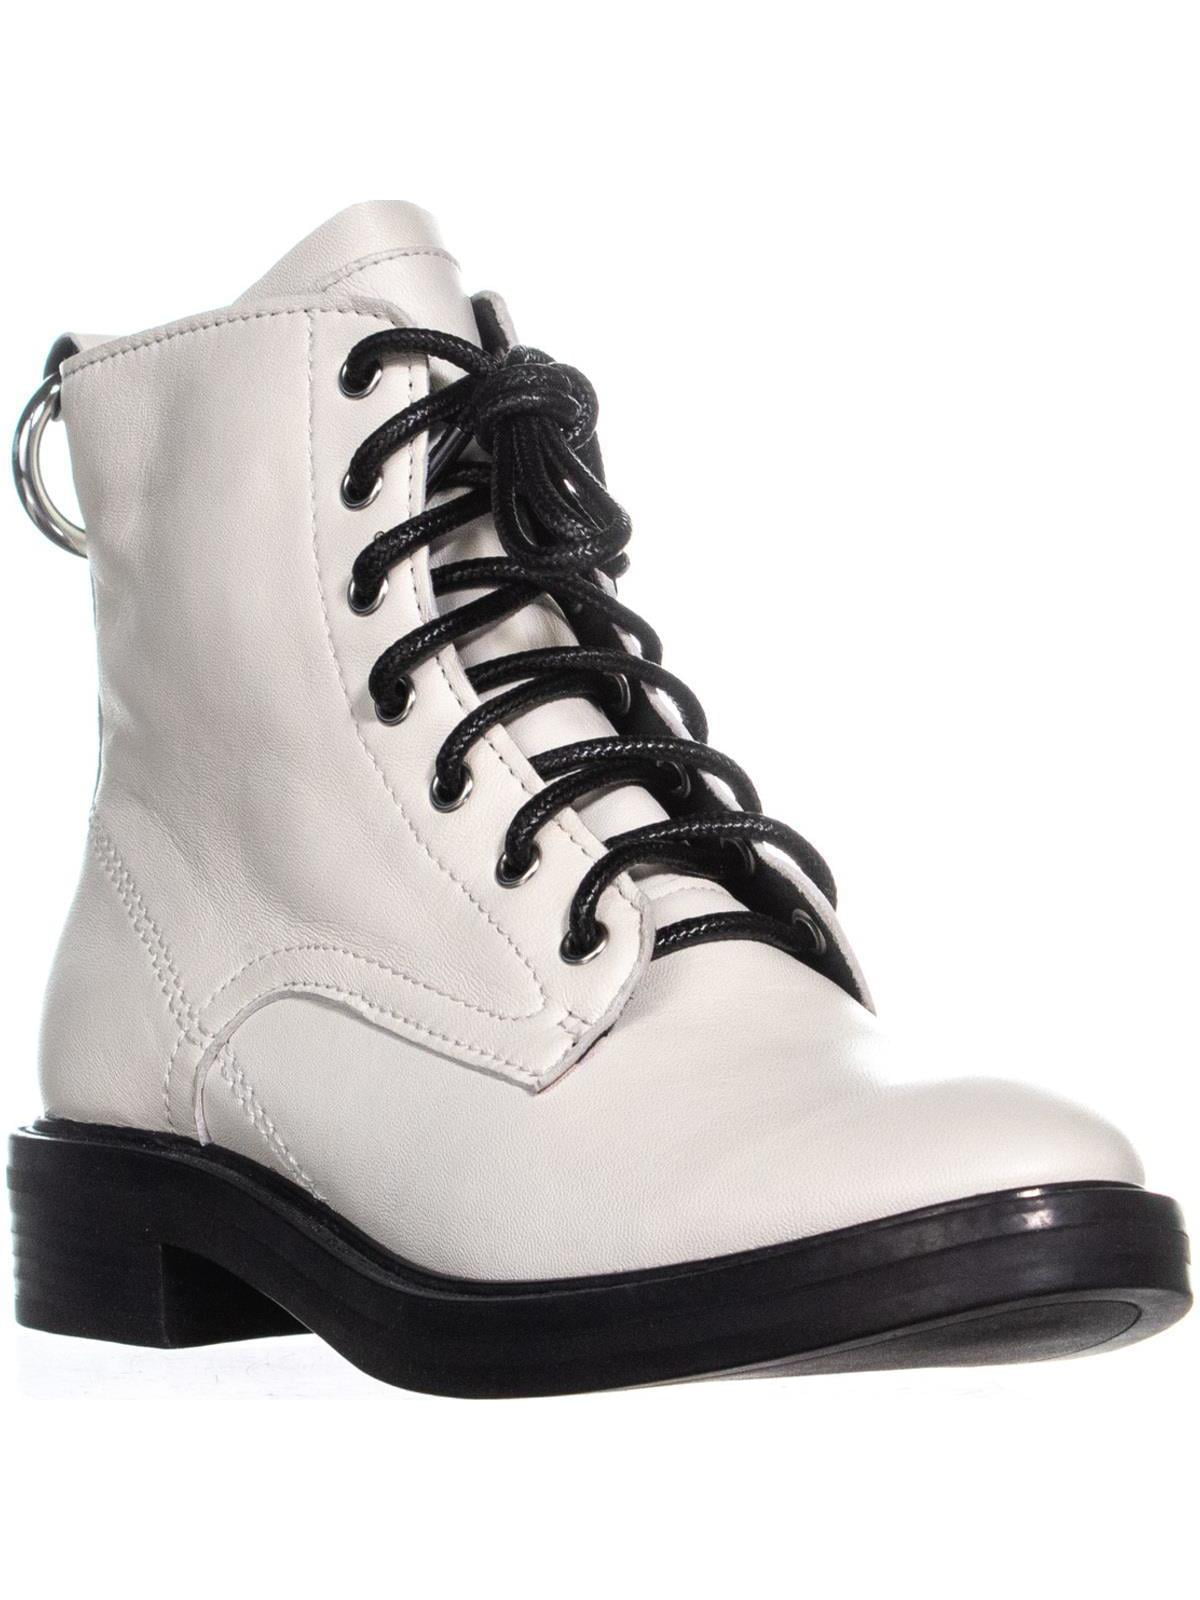 walmart white boots